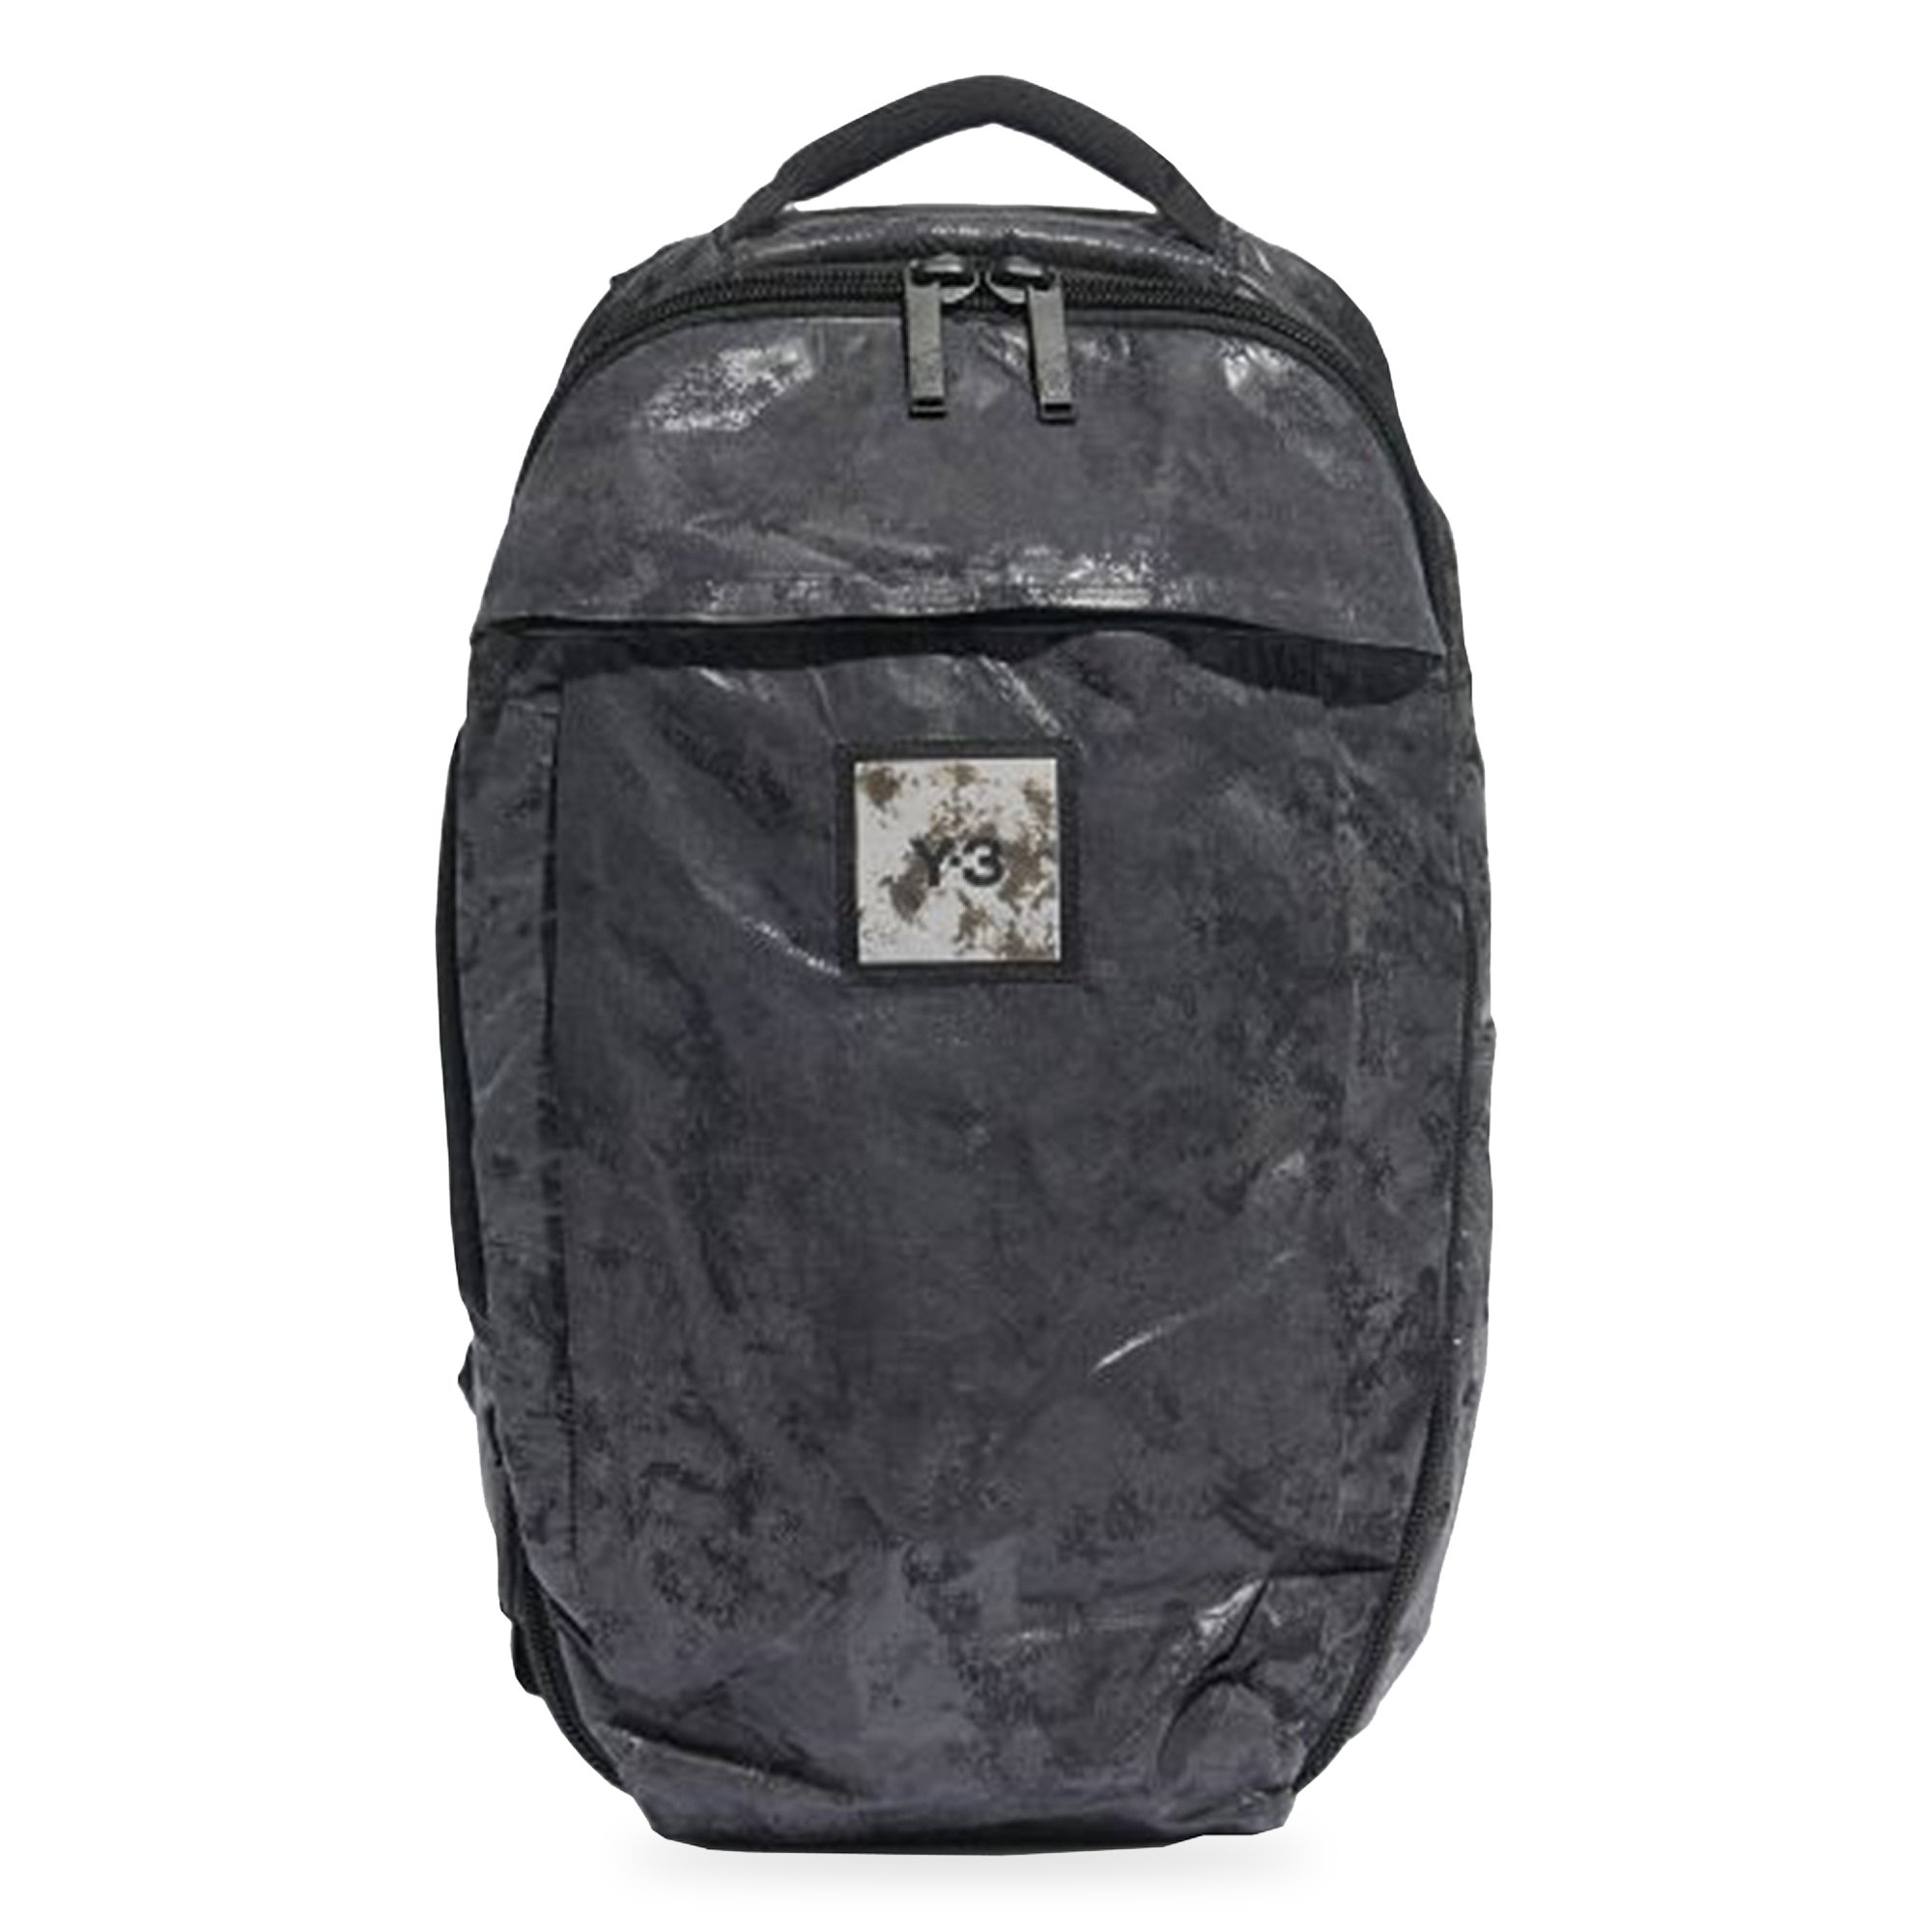 Buy Y-3 Reflective Backpack 'Black Reflective' - H31415 | GOAT